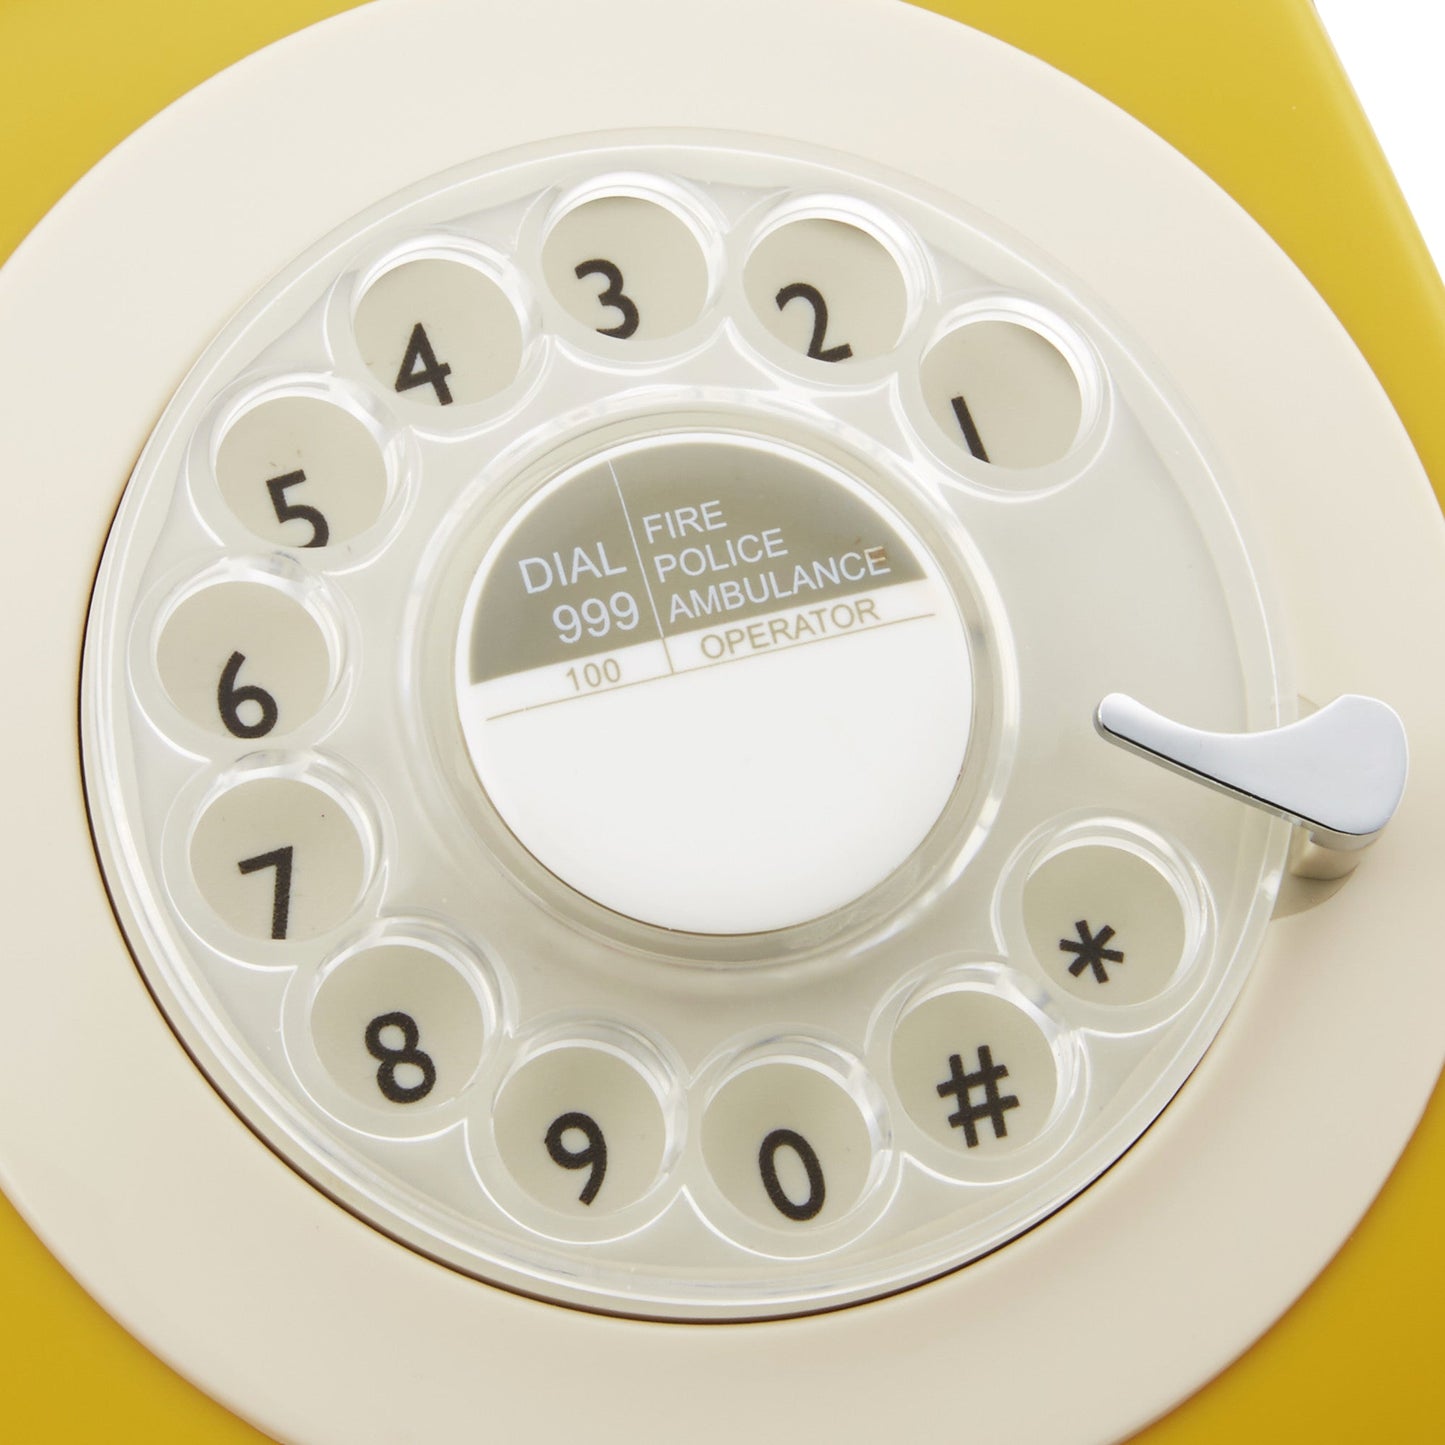 GPO Retro 746 Rotary Telephone - Mustard